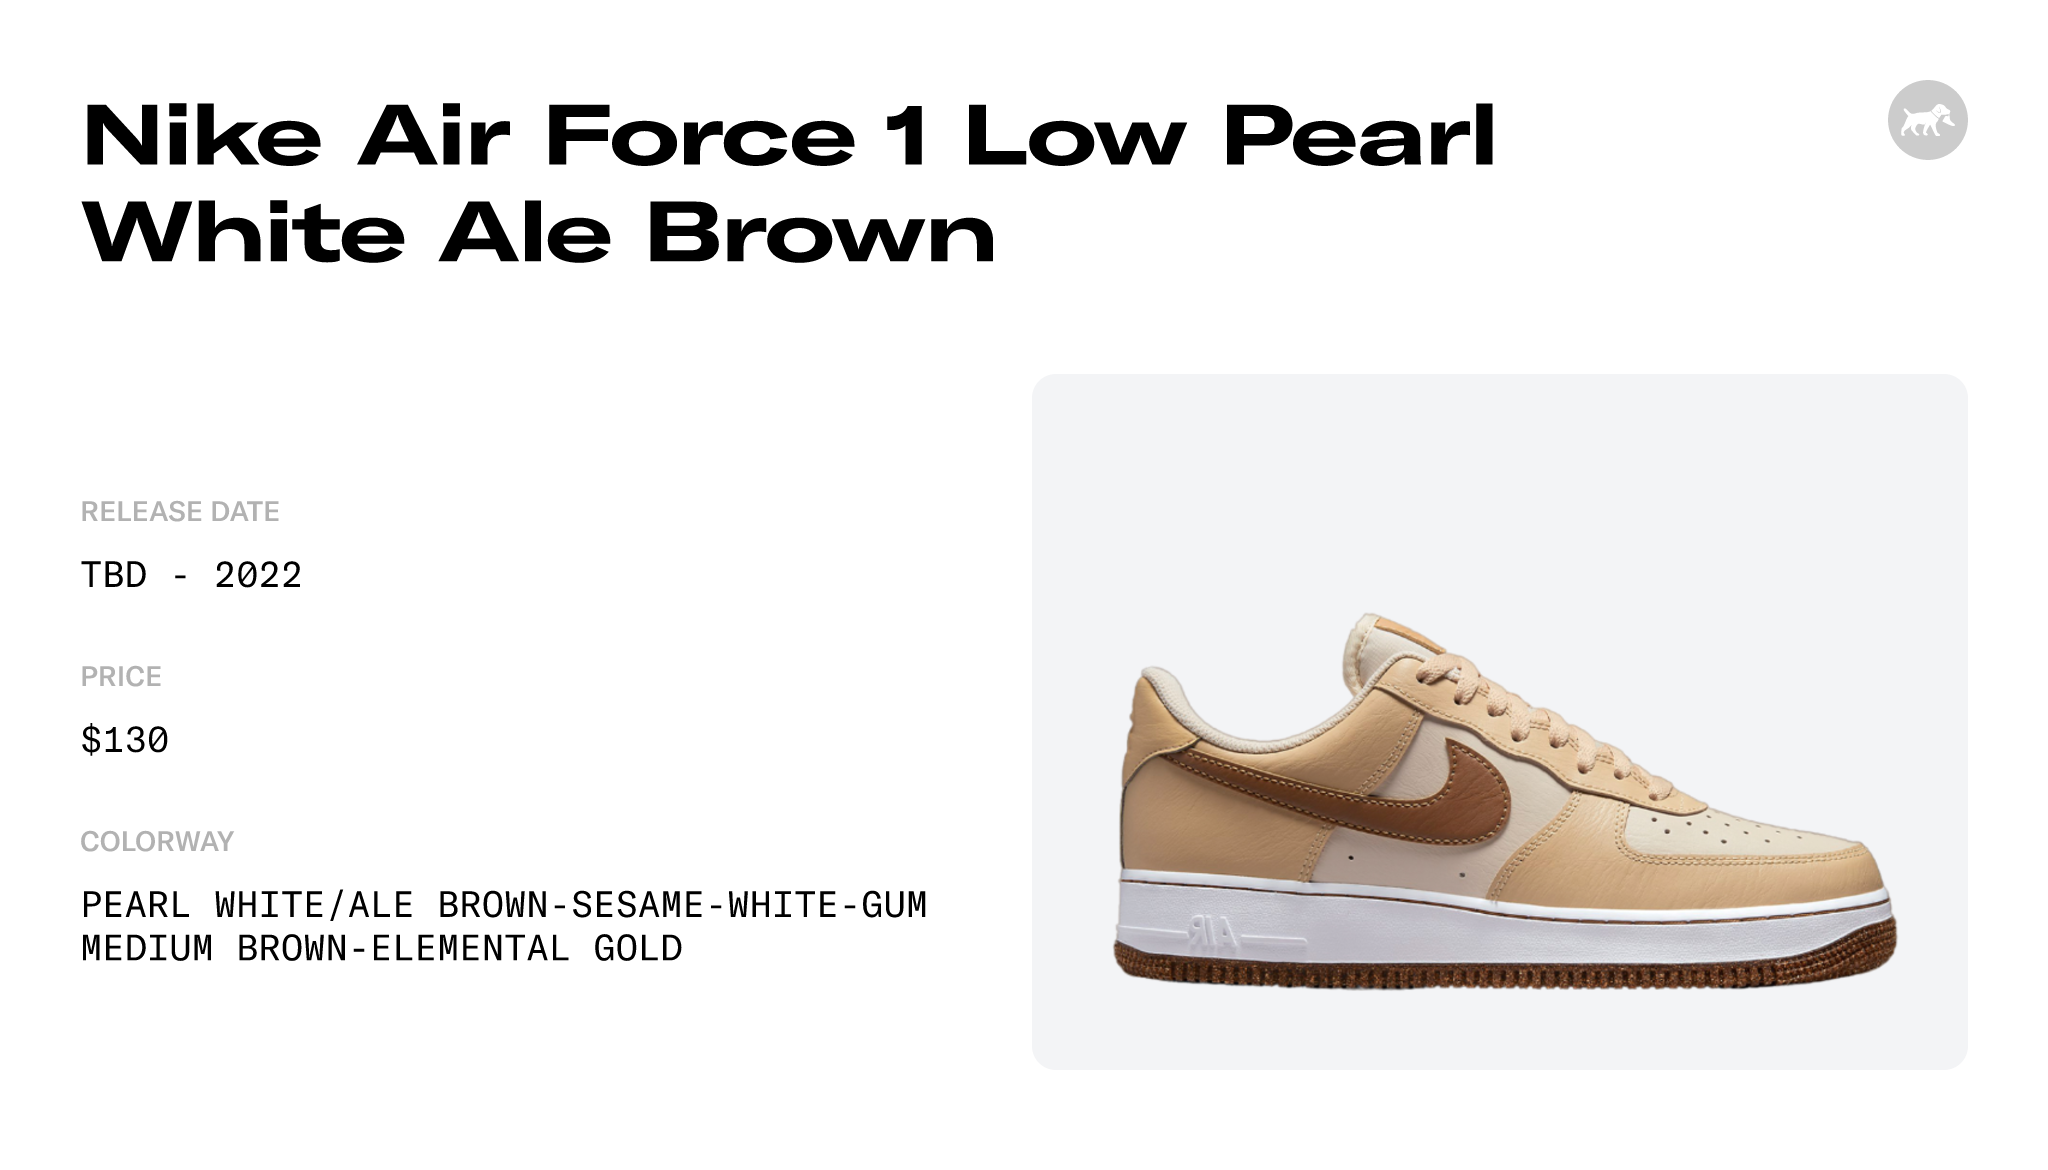 Men's shoes Nike Air Force 1 '07 LV8 Pearl White/ Ale Brown-Sesame